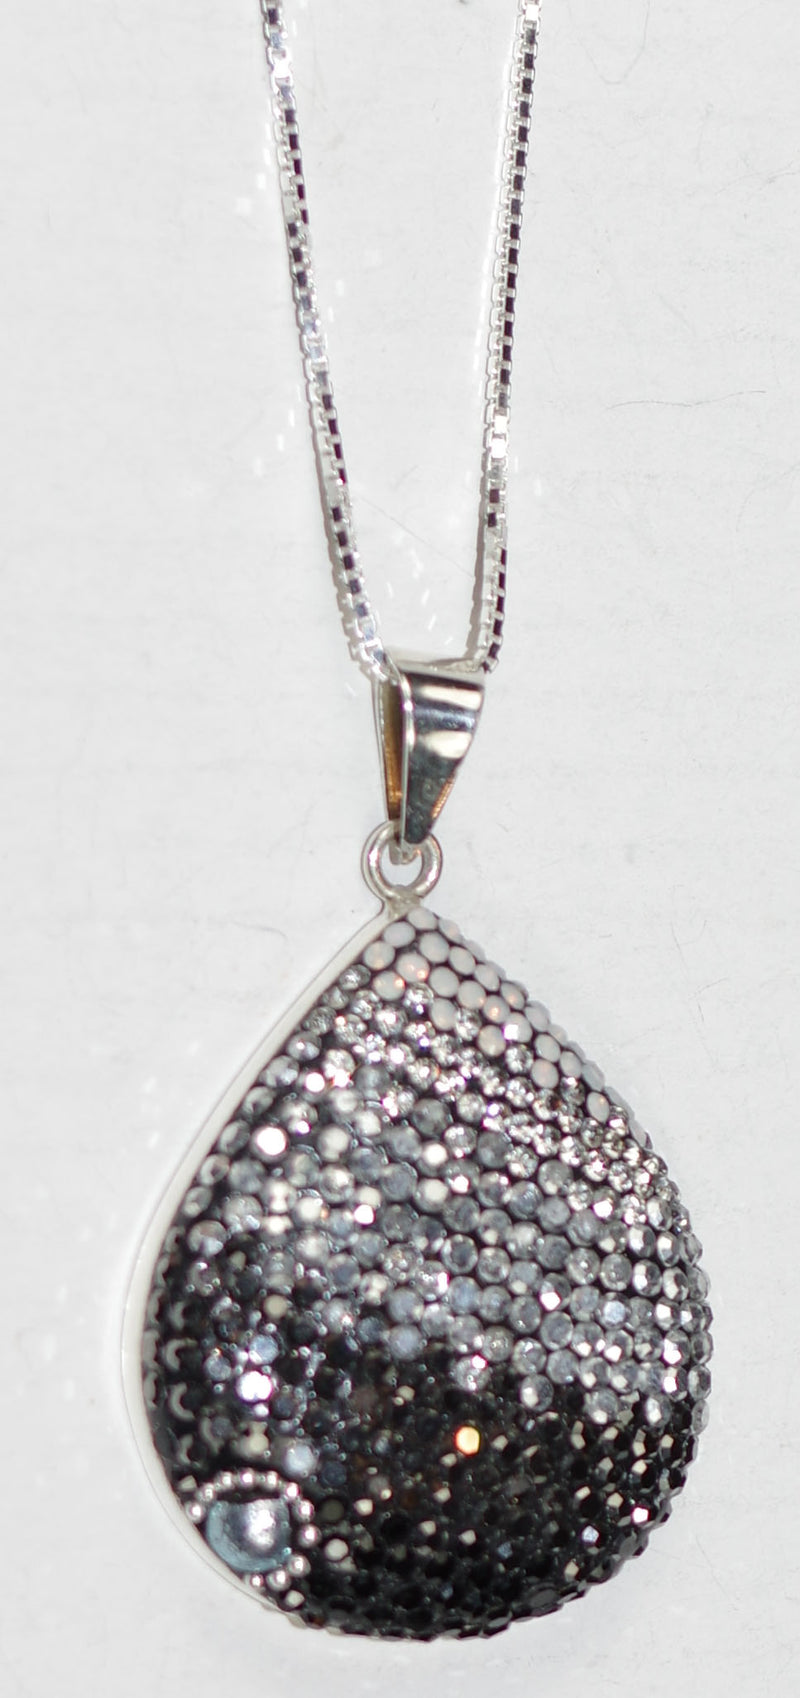 MOSAICO PENDANT PP-8678-H: multi color Austrian crystals in 1.25" solid silver pendant, 18-20 inch adjustable silver chain